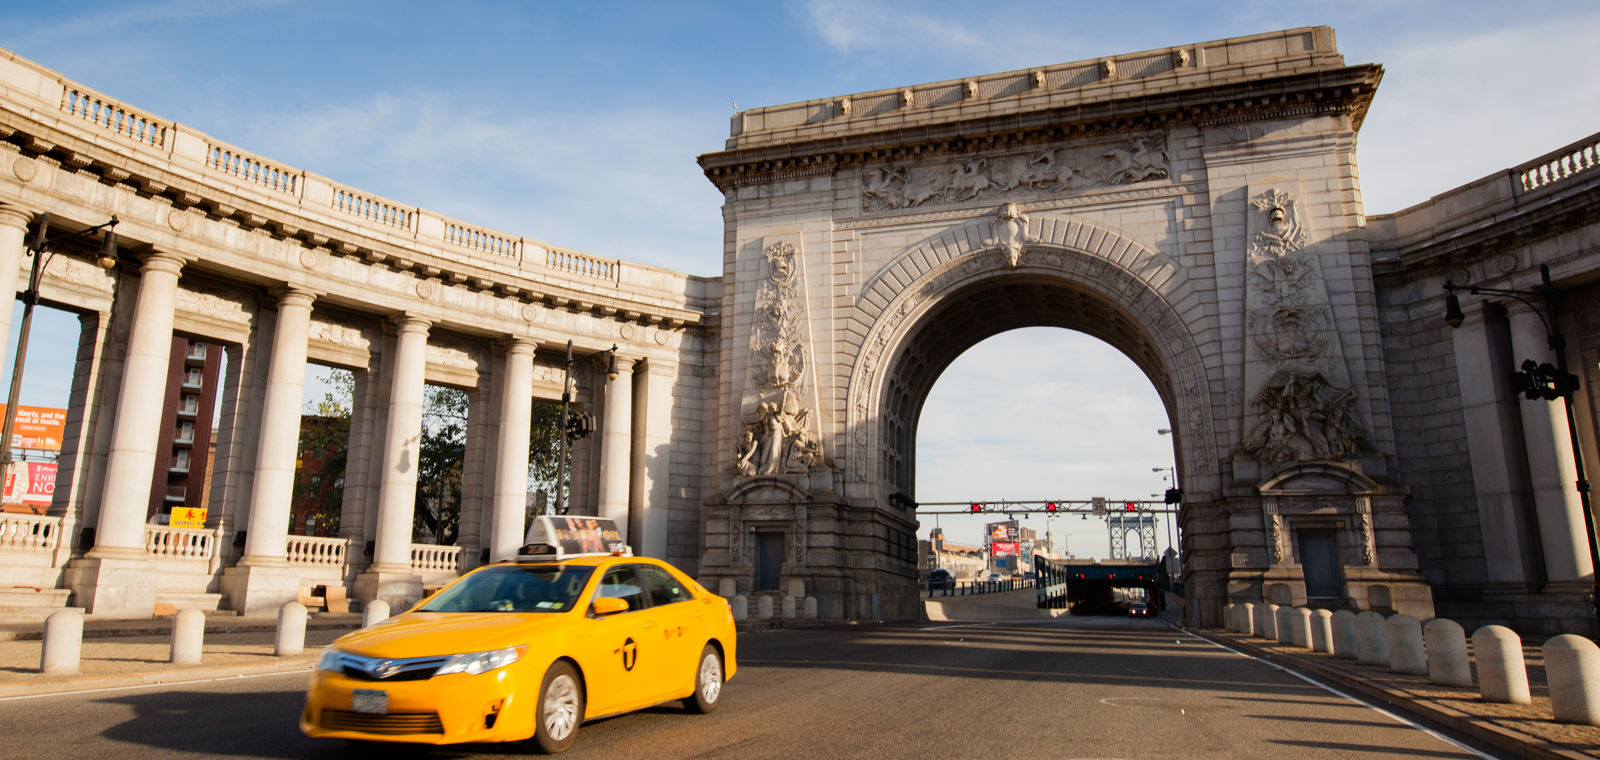 Taxi In Front Of Manhattan Bridge Archway